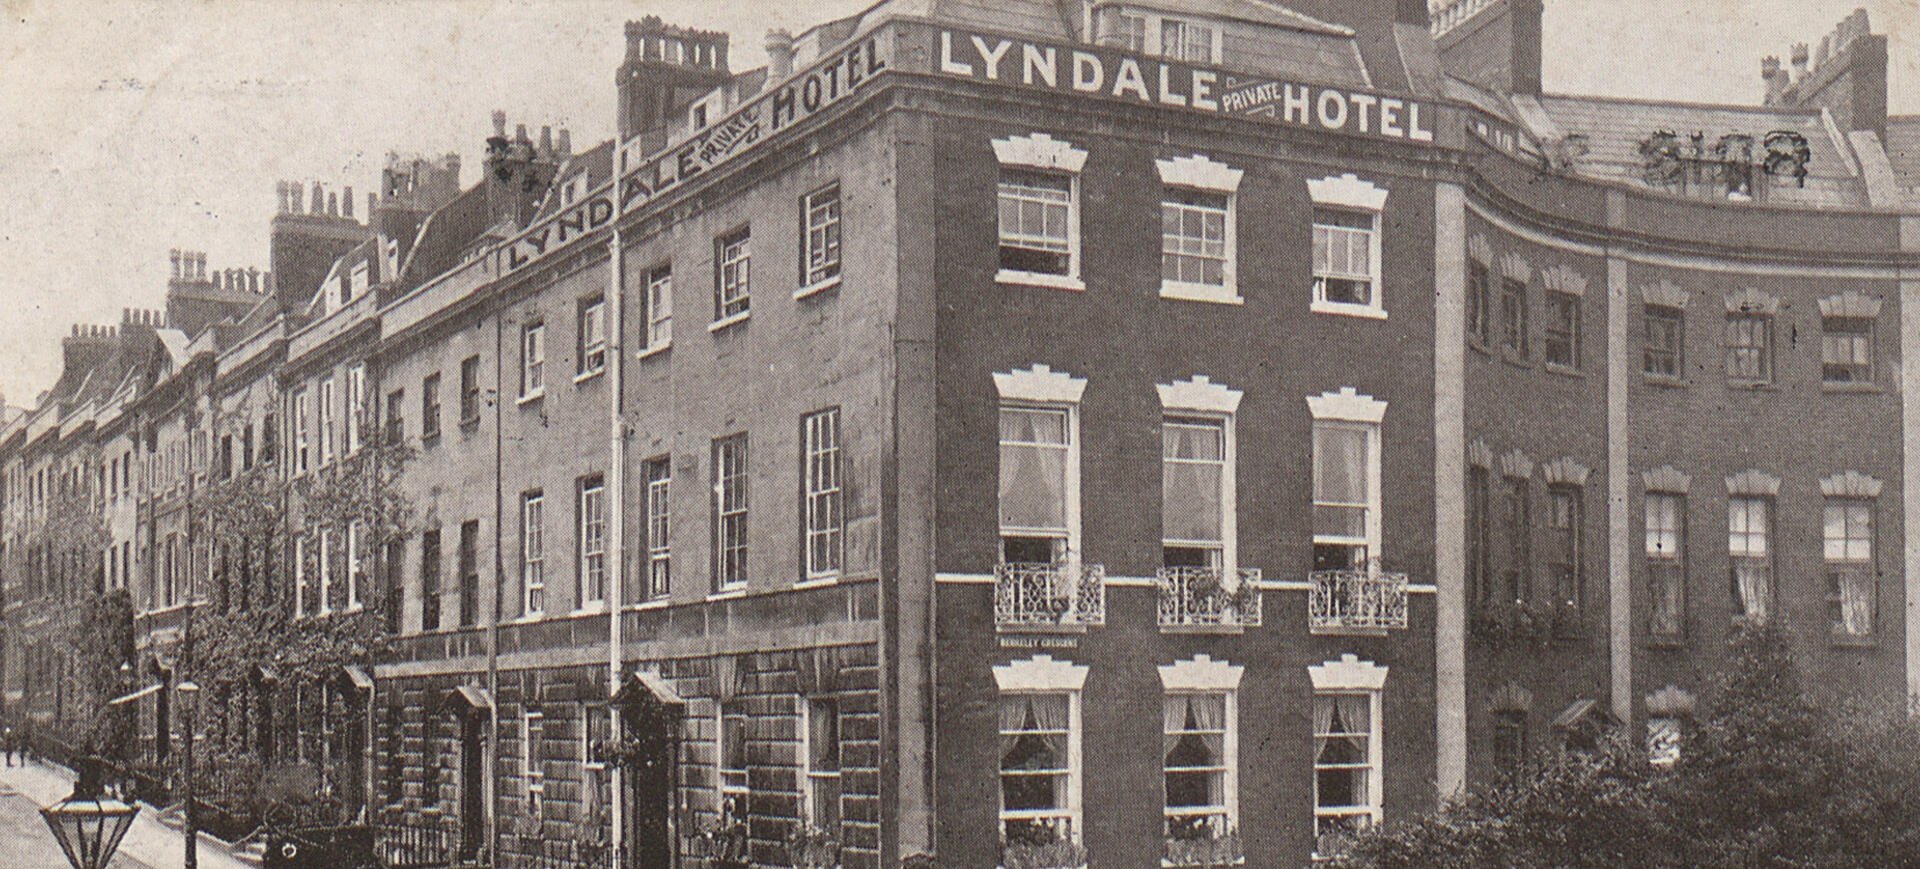 lyndale hotel banner